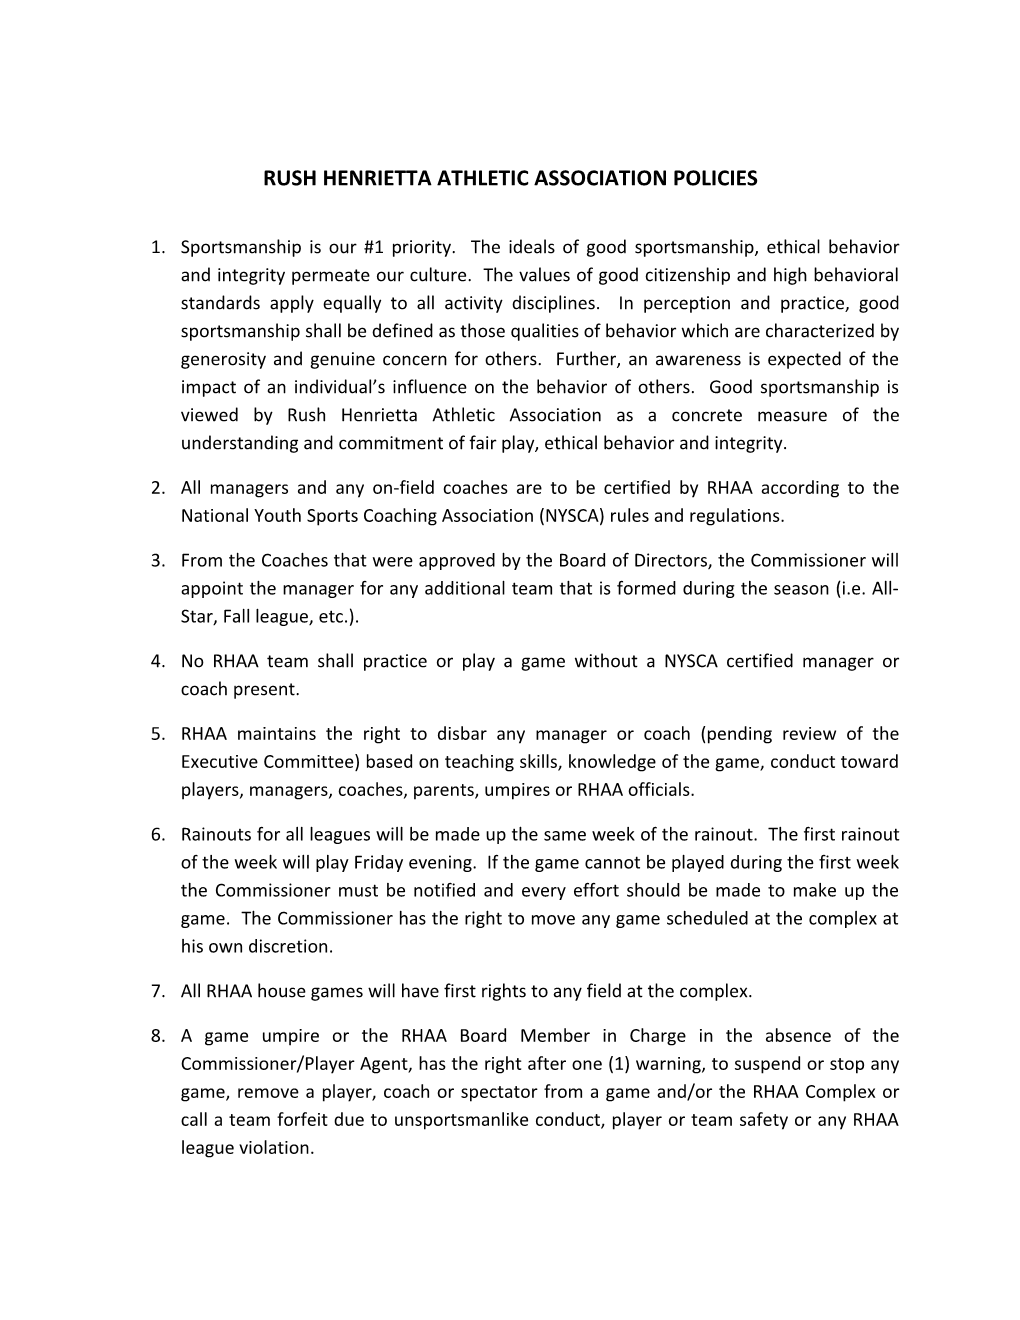 Rush Henrietta Athletic Association Policies